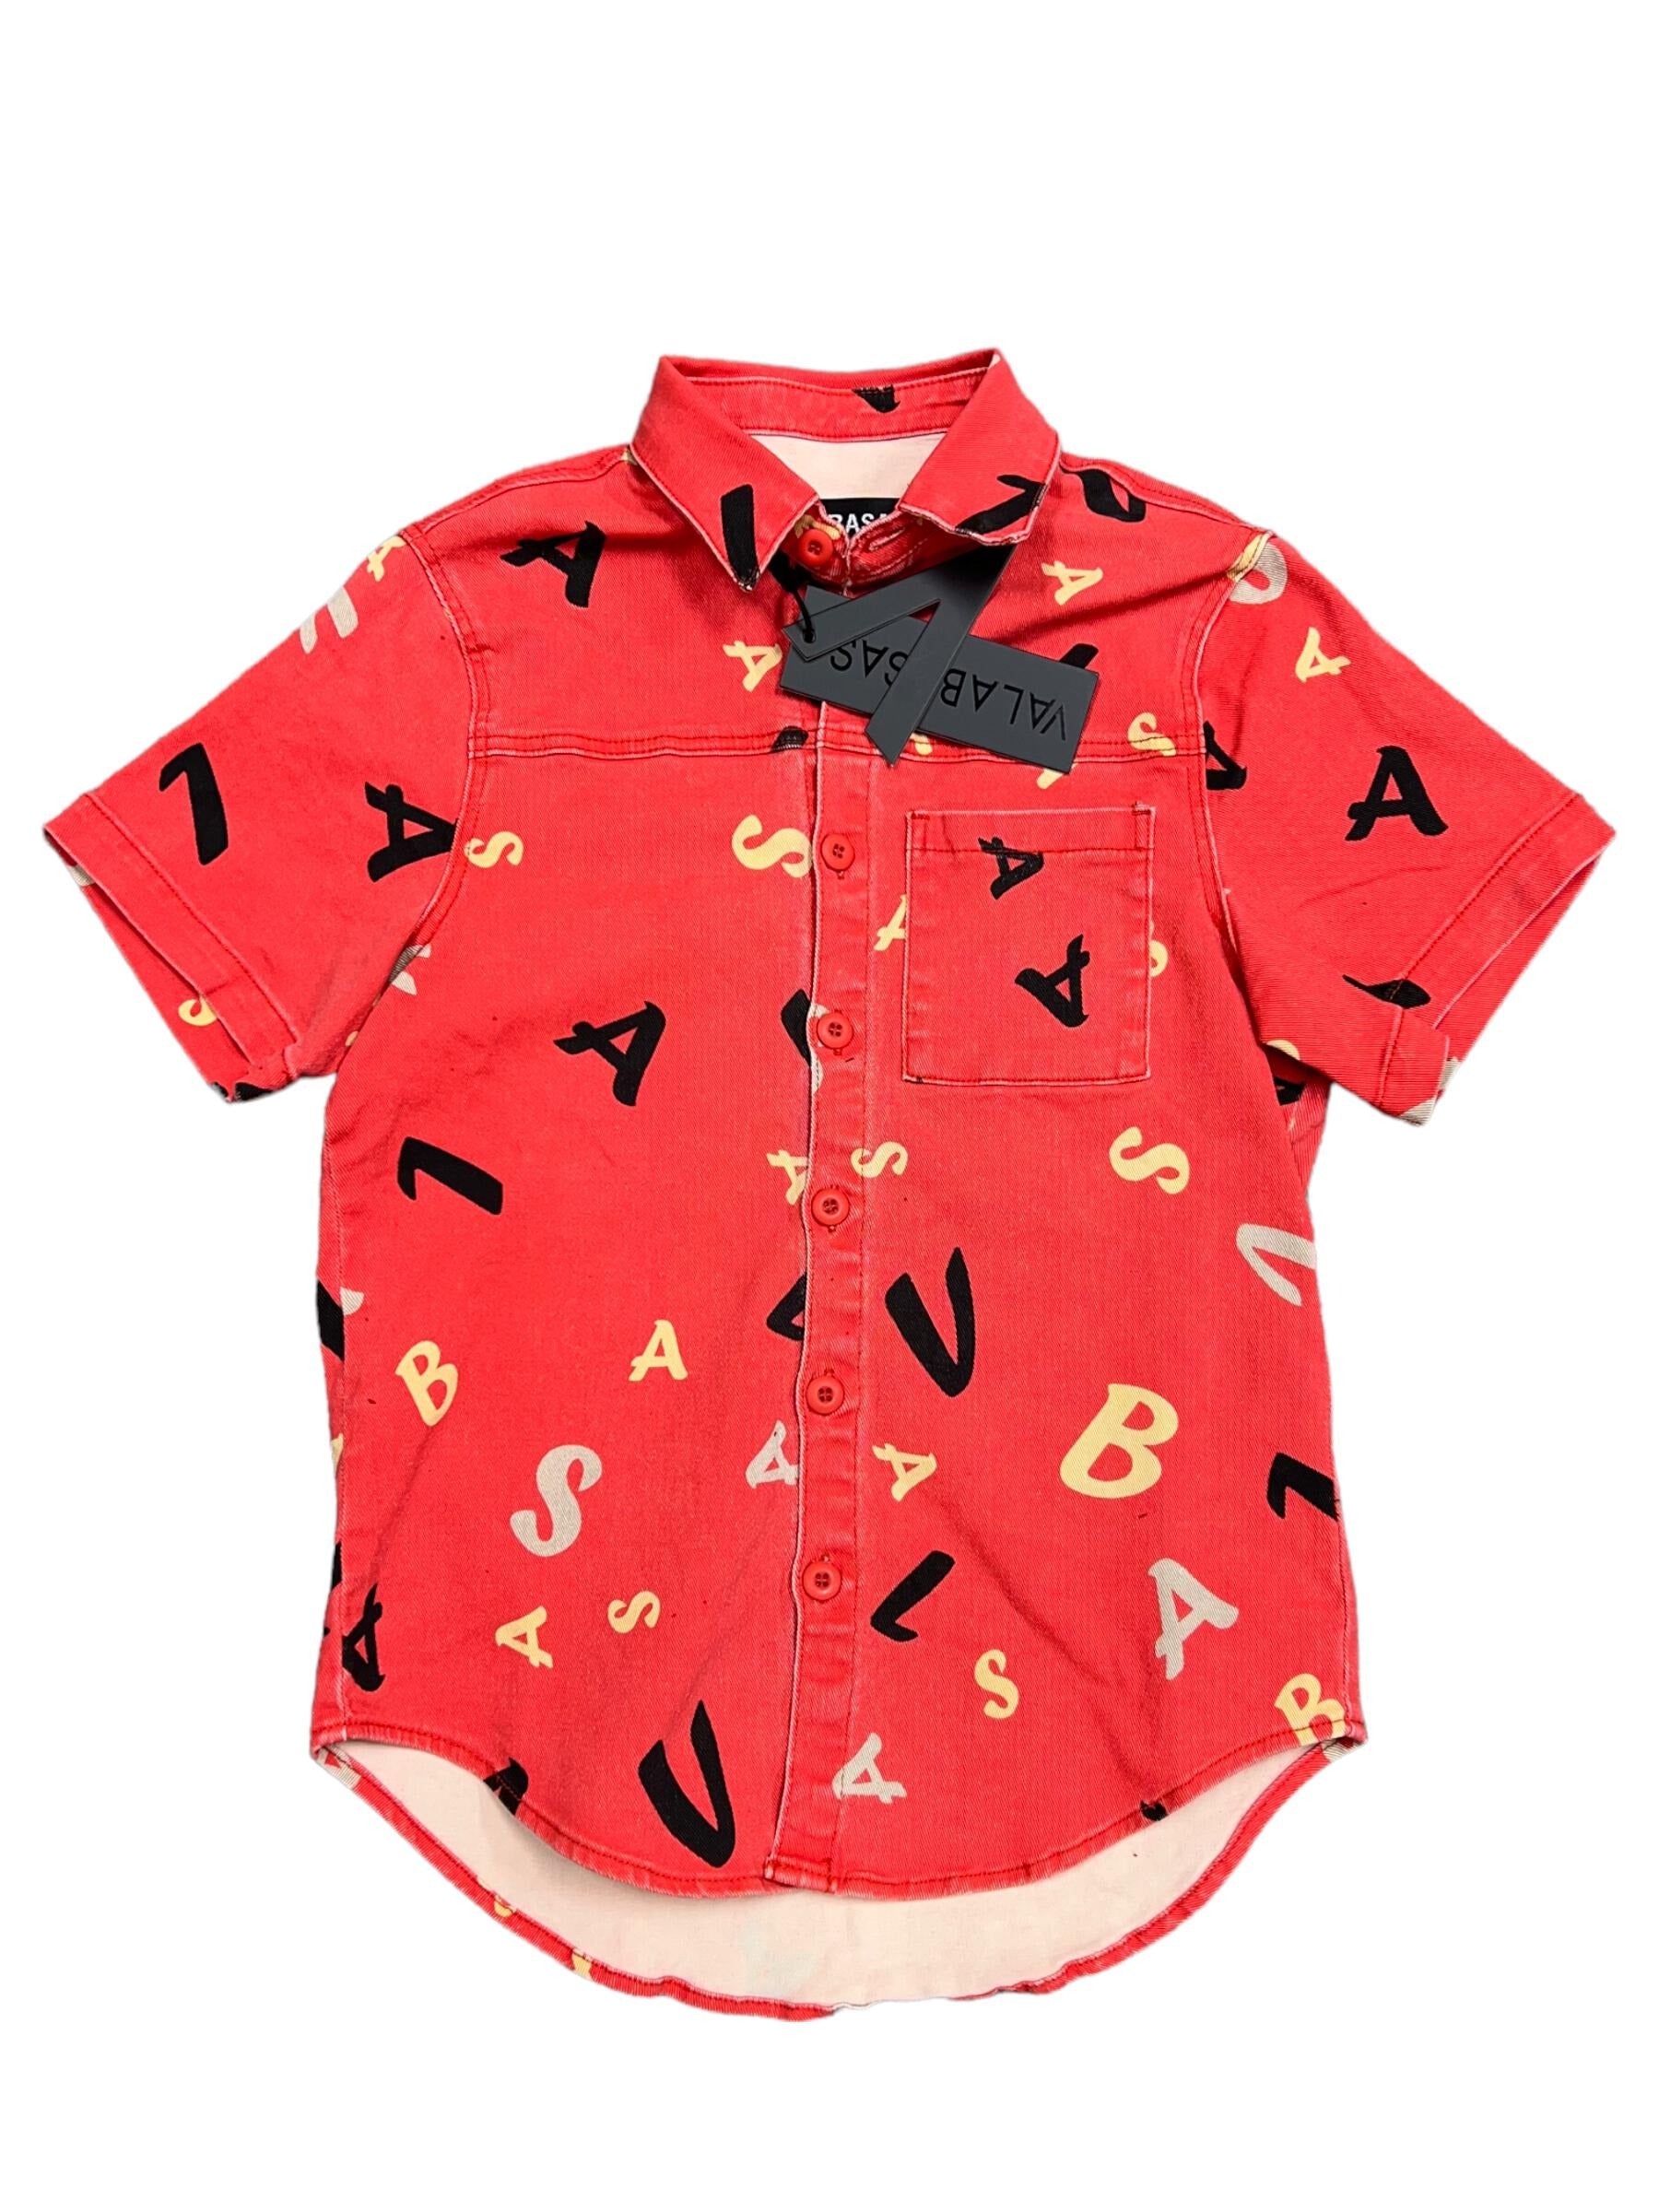 Valabasas Button Up Shirt - Puzzle Woven